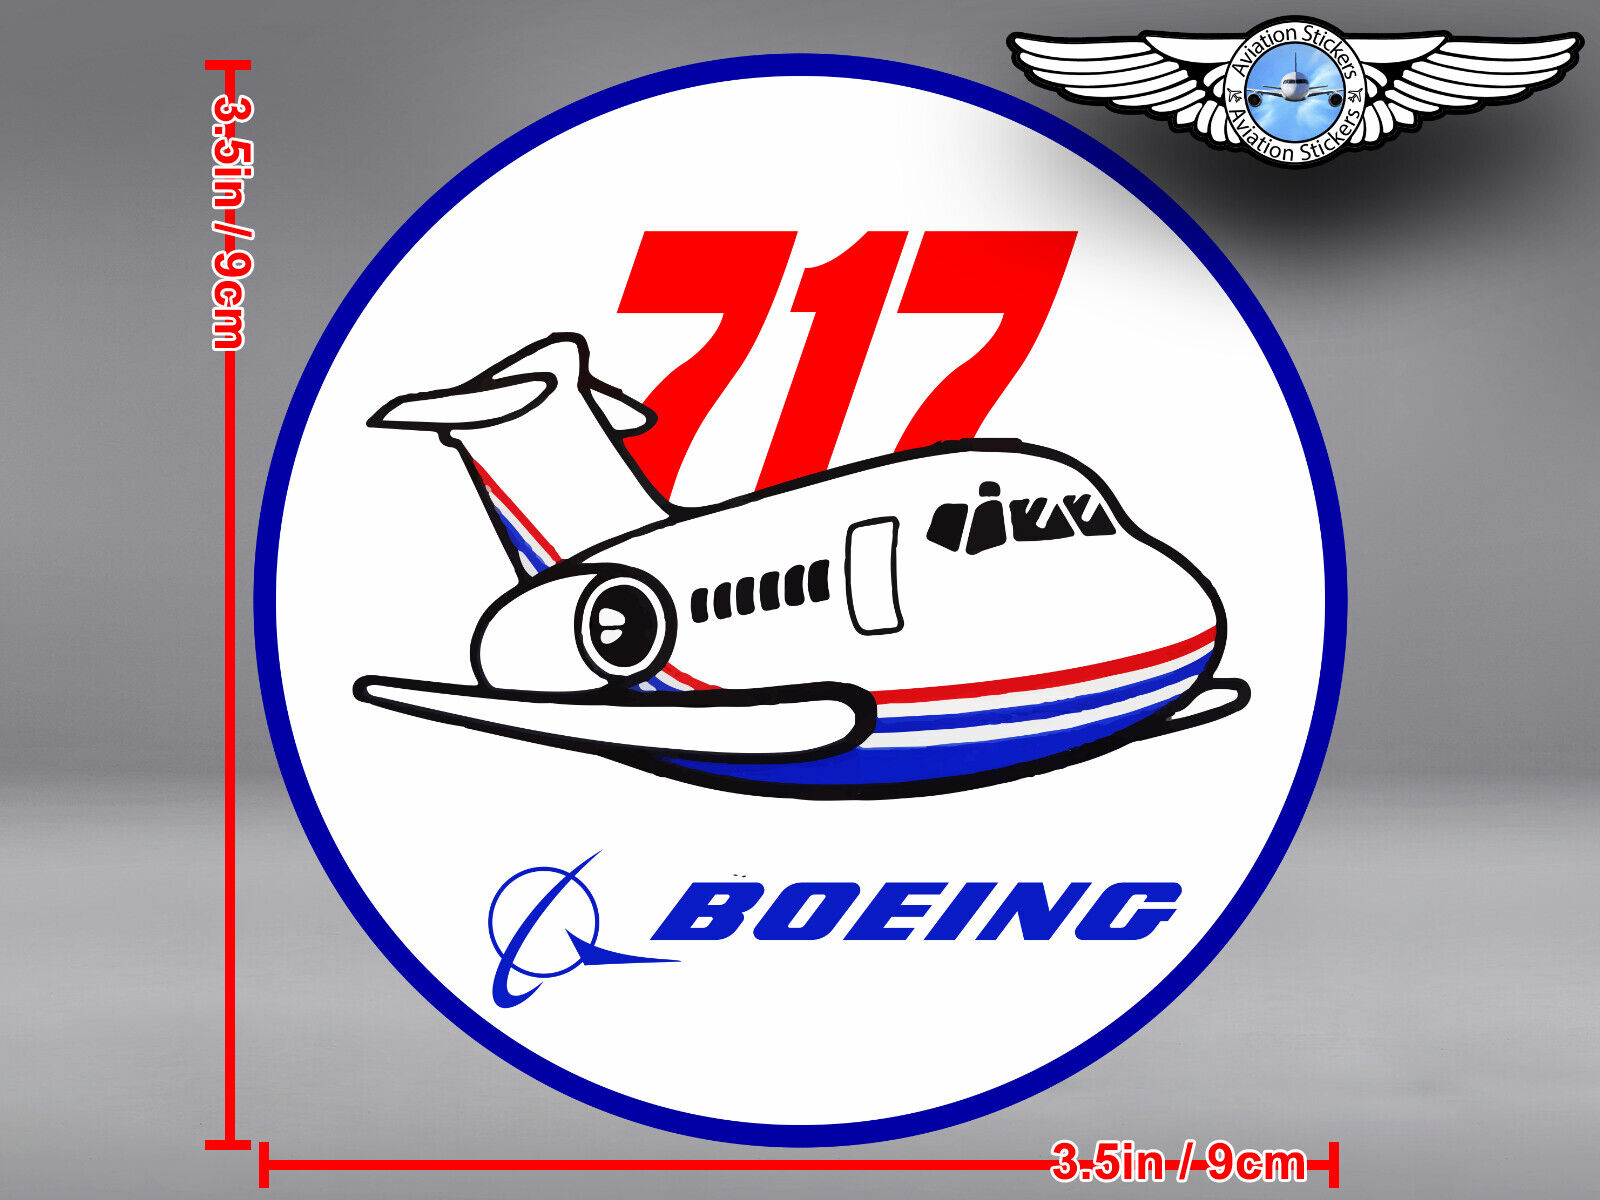 BOEING 717 B717 VINTAGE PUDGY STYLE ROUND DECAL / STICKER